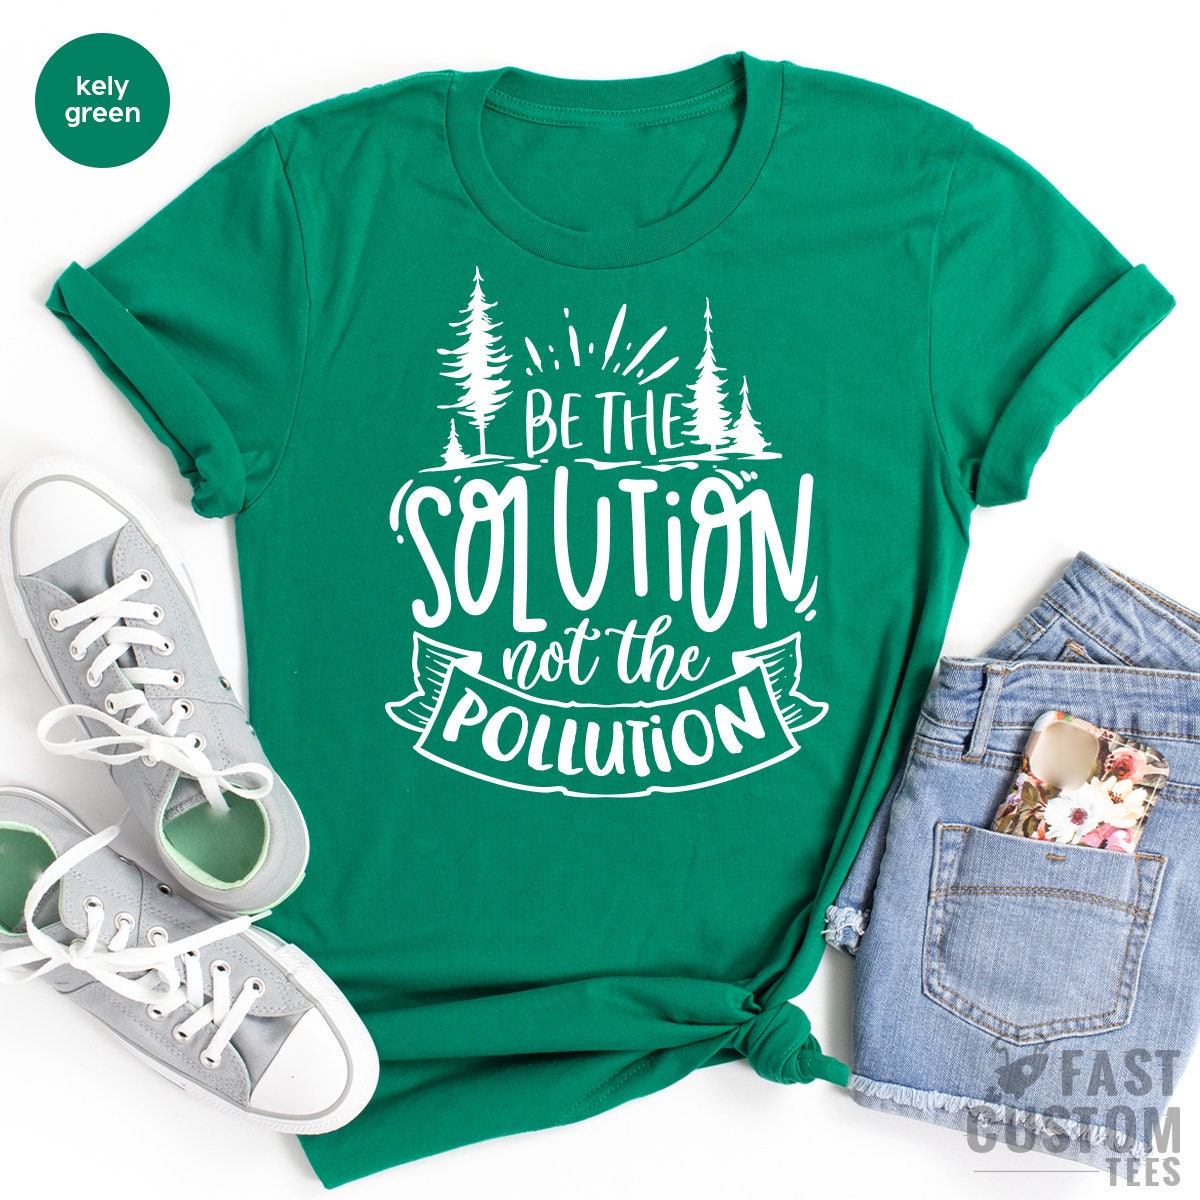 Earth Mother TShirt, Environment T Shirt, Activist Gift, Vegan Shirt, Earth Days T-Shirt, Nature Shirt, Climate Change Tee, Ecofriendly Gift - Fastdeliverytees.com